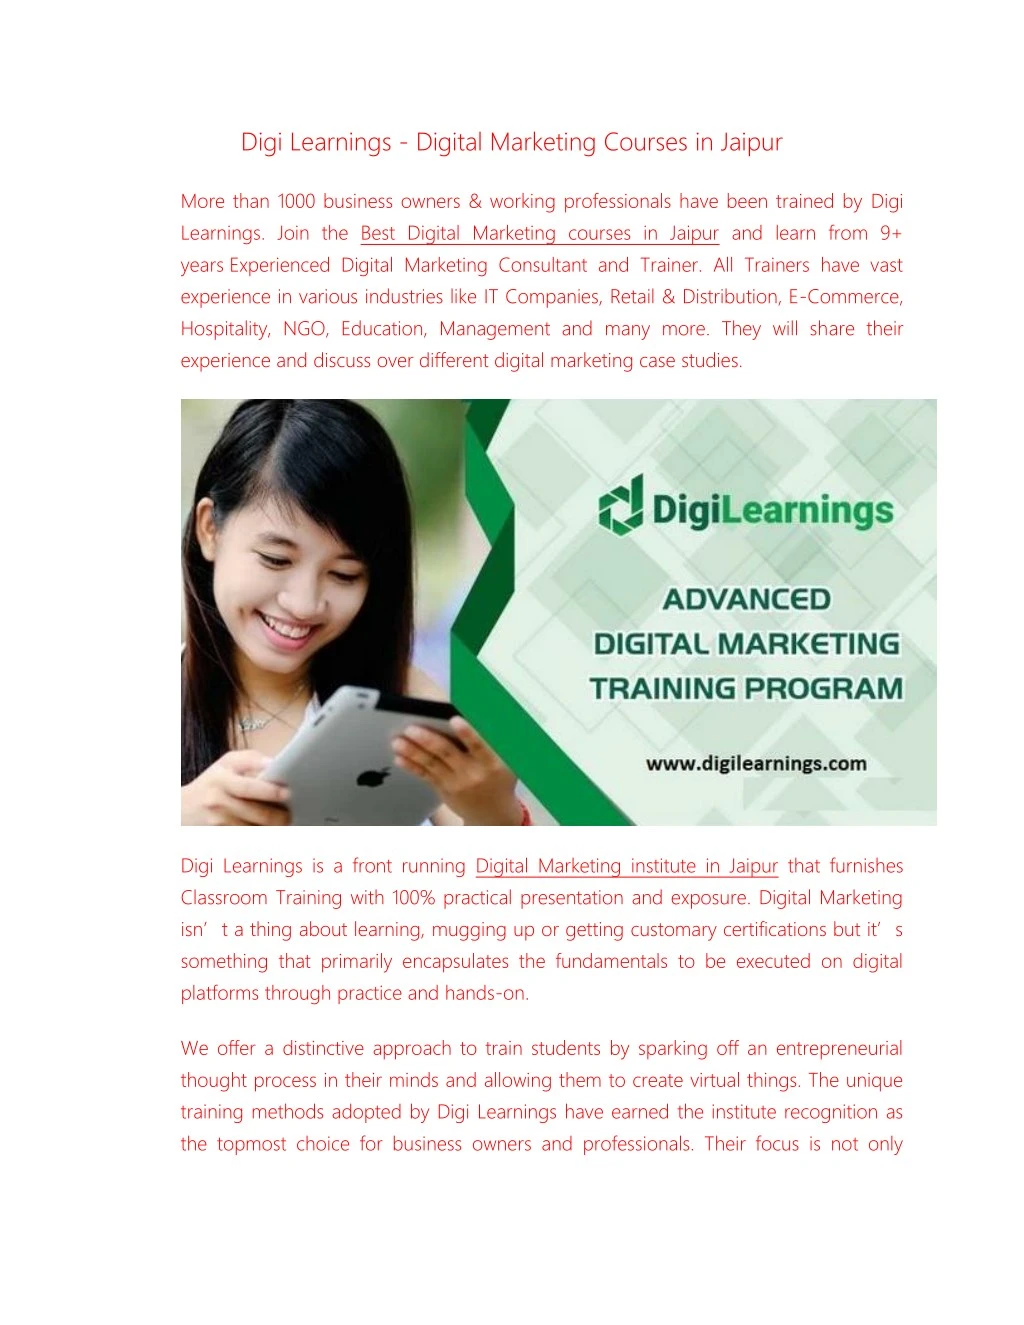 digi learnings digital marketing courses in jaipur